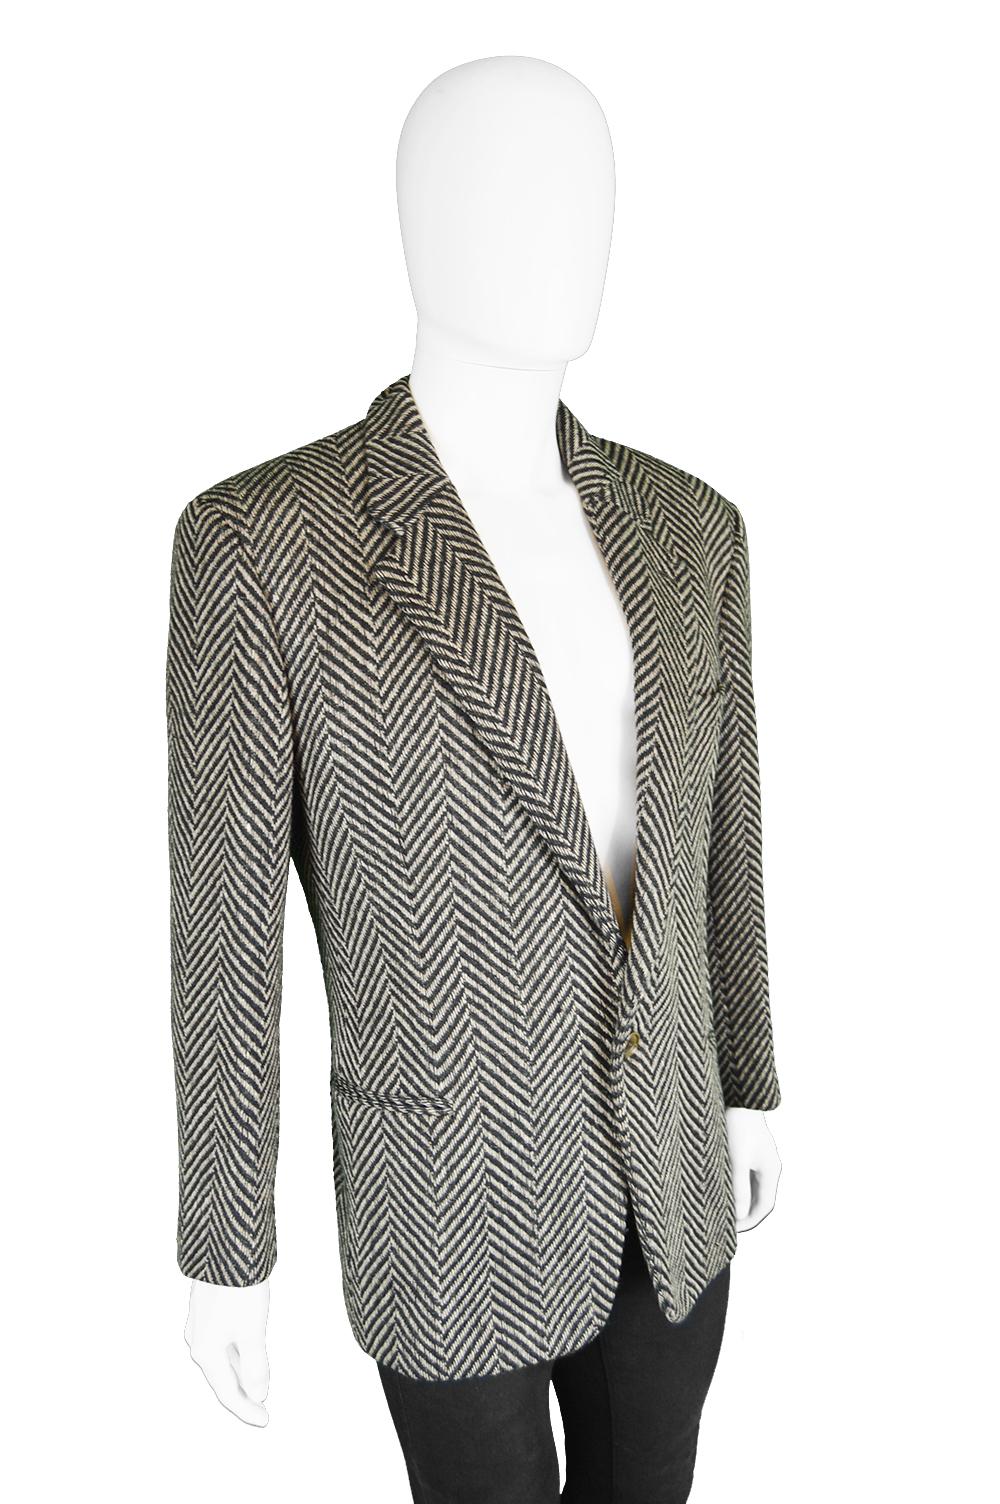 Gray Giorgio Armani Men's Vintage Wool Herringbone Sport Coat Blazer Jacket, c. 1980s